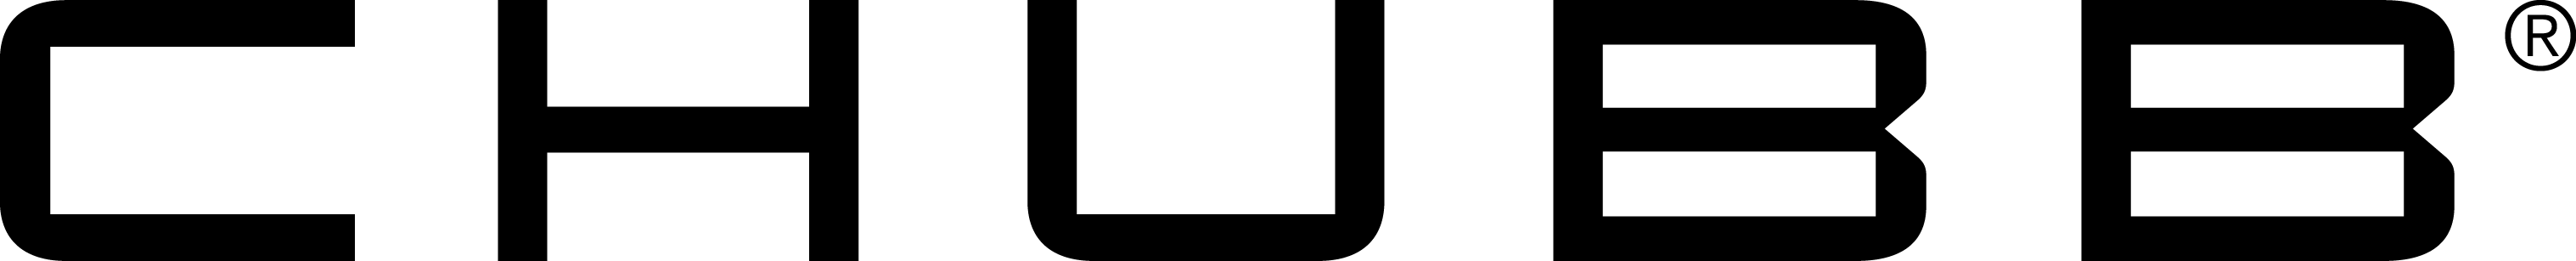 Chubb-Logo